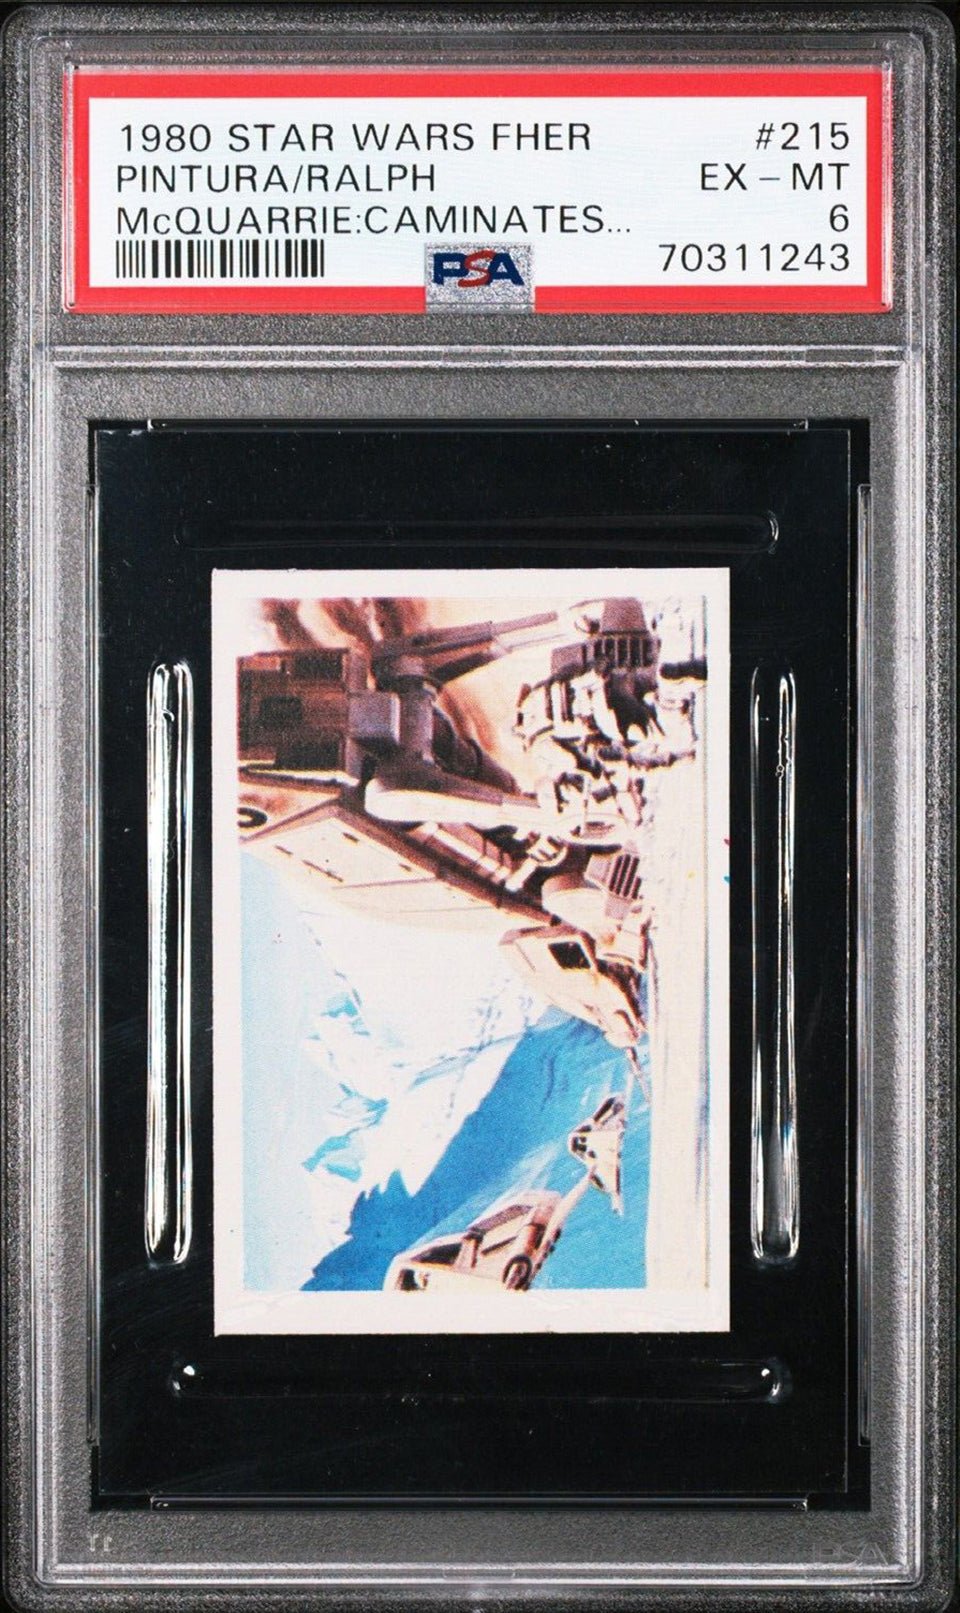 AT-AT Snowspeeder PSA 6 1980 Star Wars Fher Pintura de Ralph McQuarrie:C... #215 Star Wars Base Graded Cards - Hobby Gems